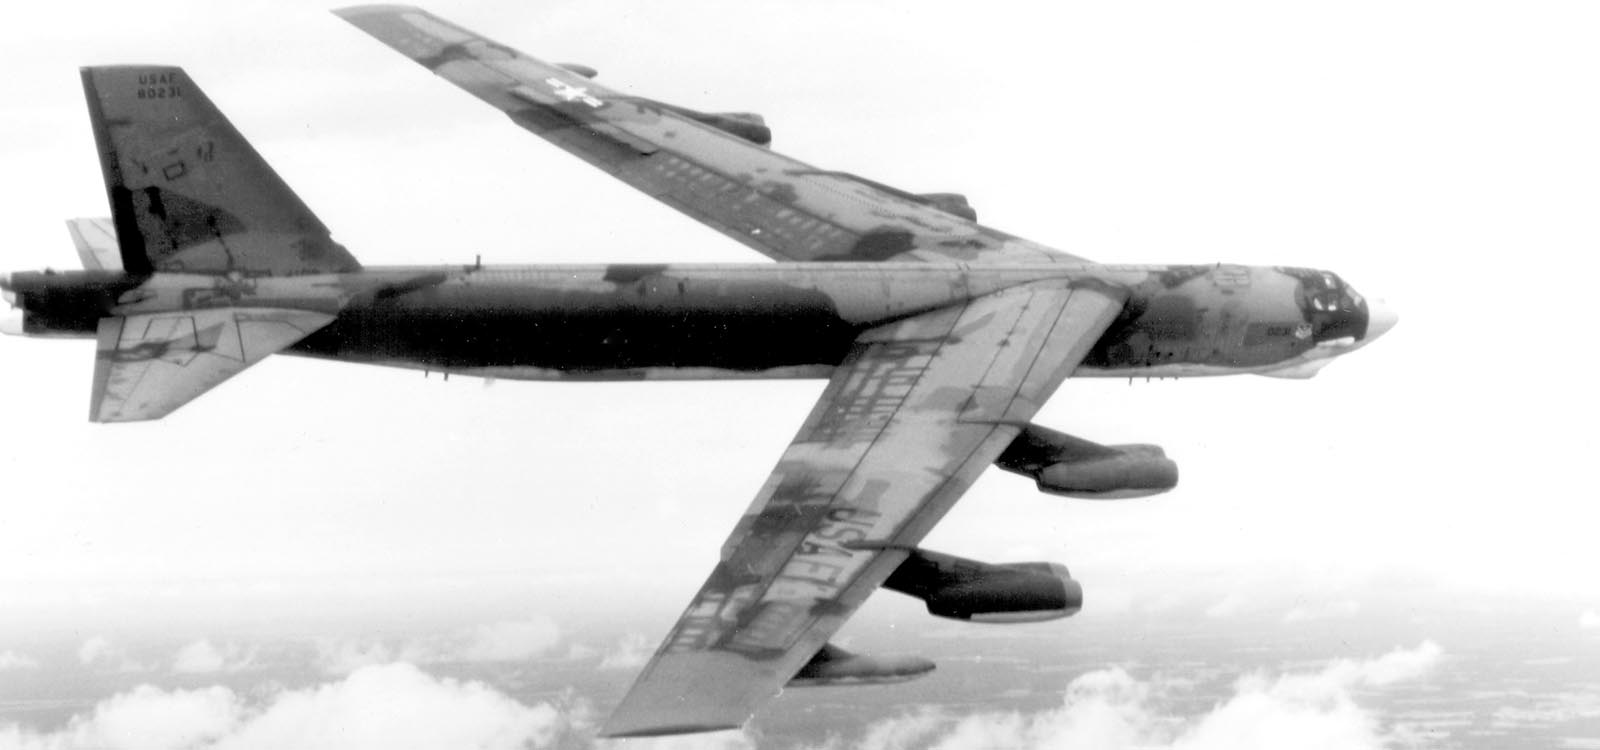 B-52 Stratofortress, 1955